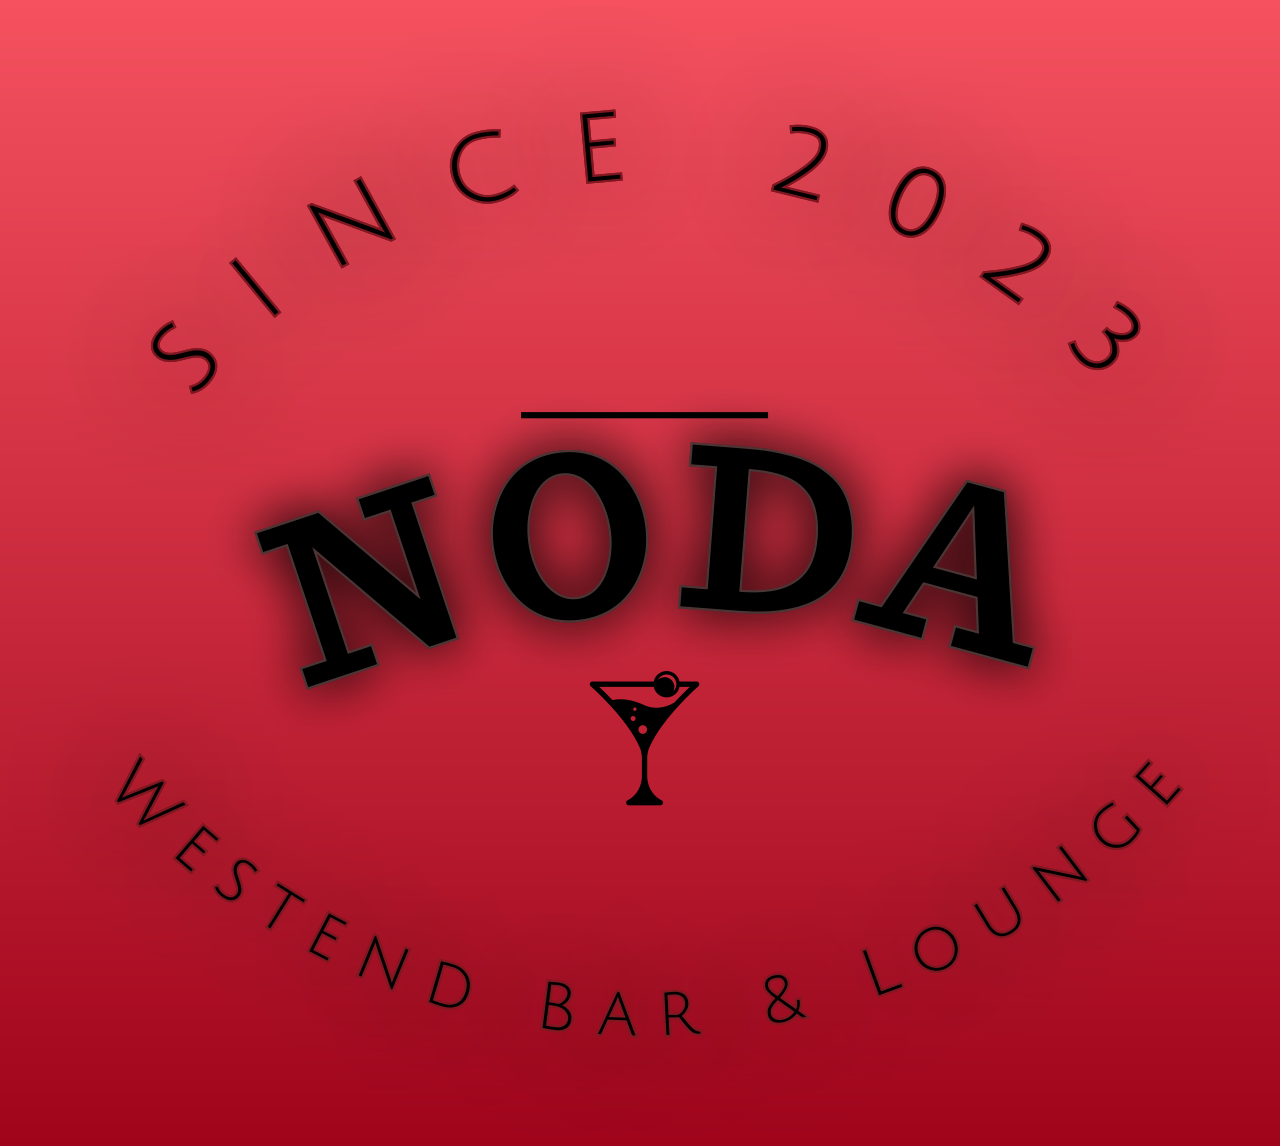 NODA 's logo